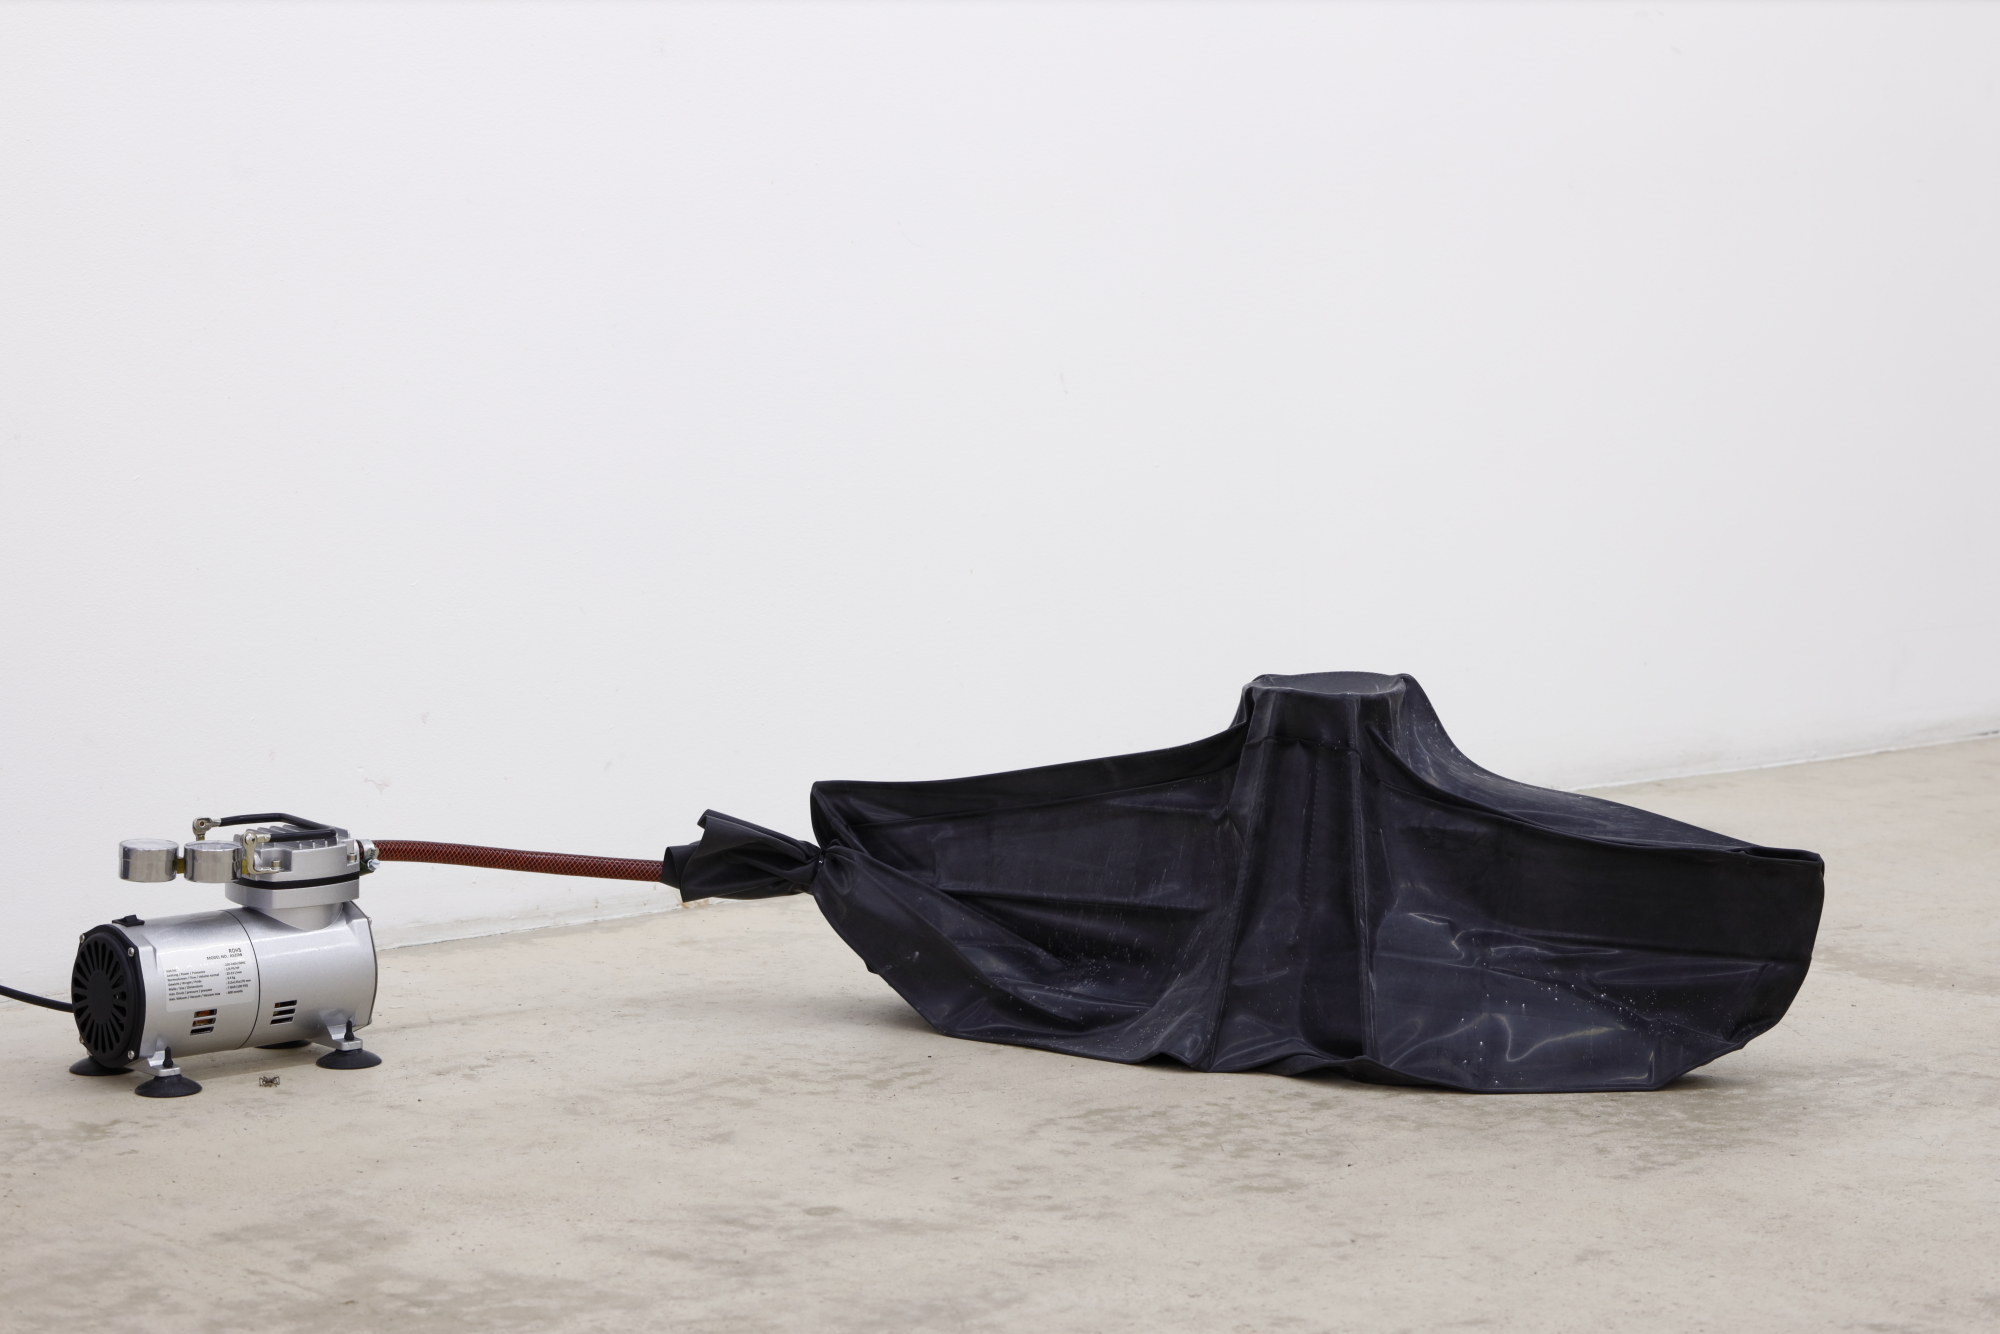  Evita Vasiļjeva, “Loat”, 2019, latex, steel, compressor, cable ties, plastic, cardboard 